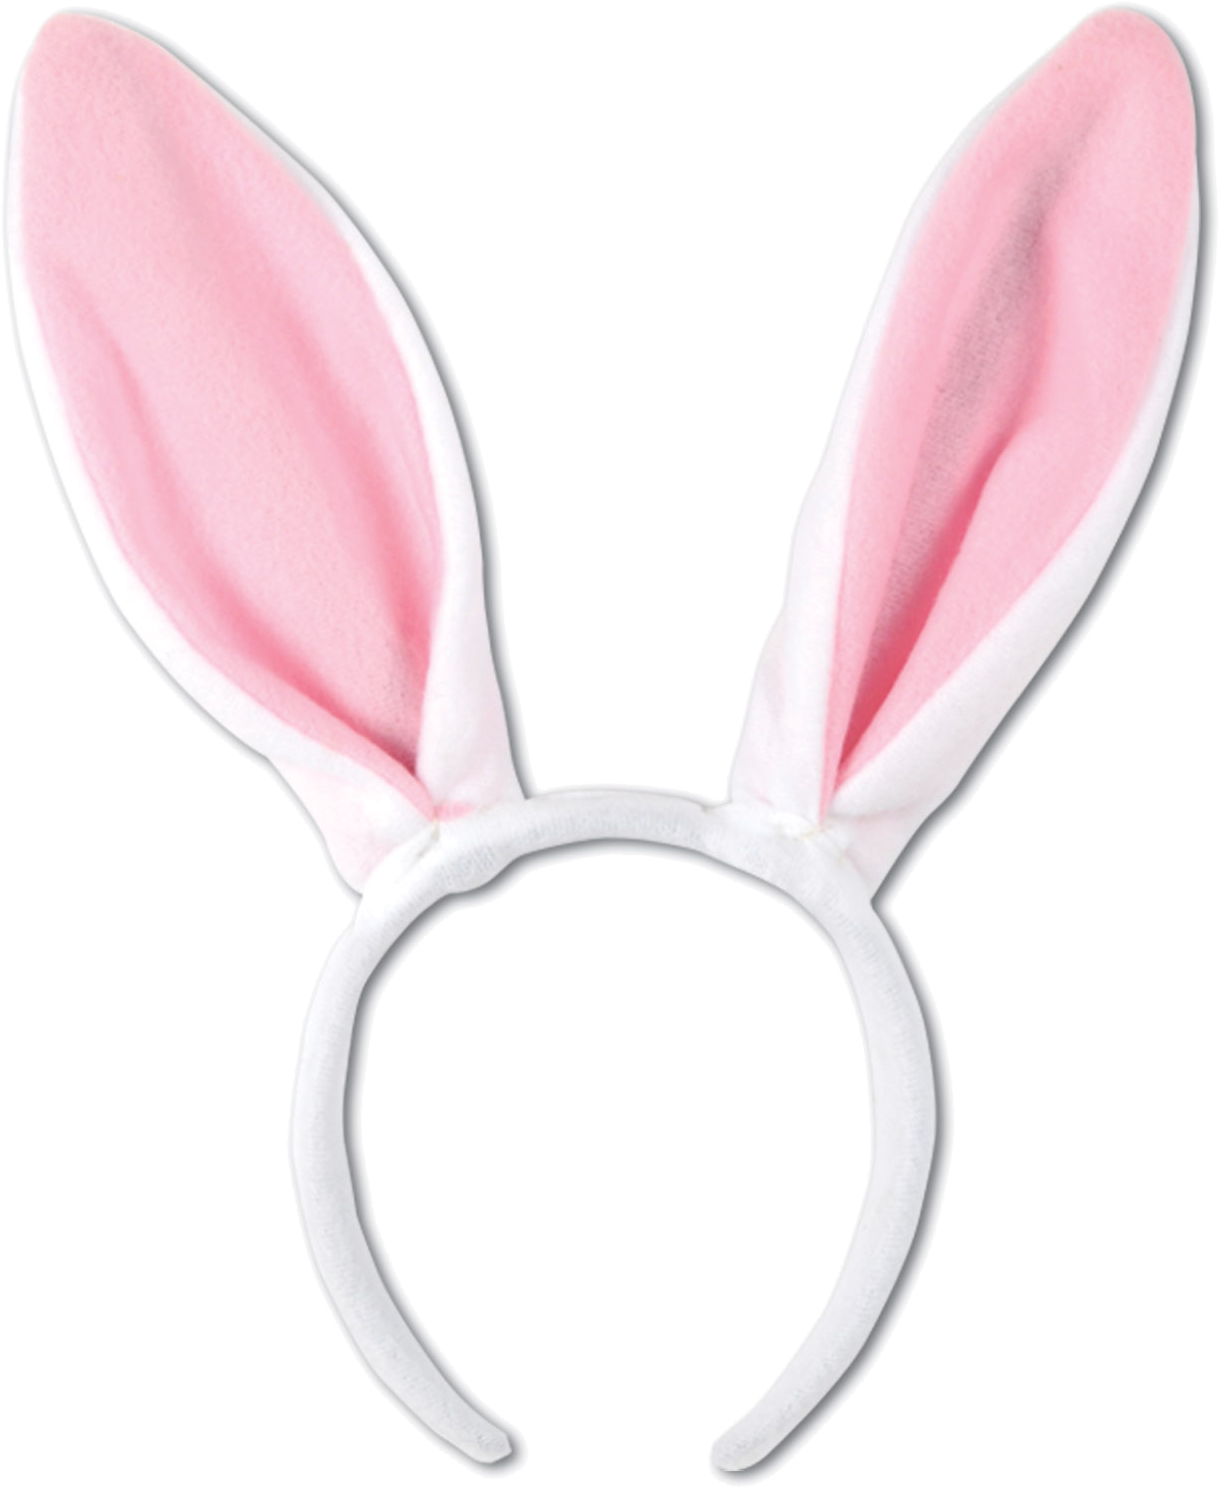 Bunny Ears Transparent File